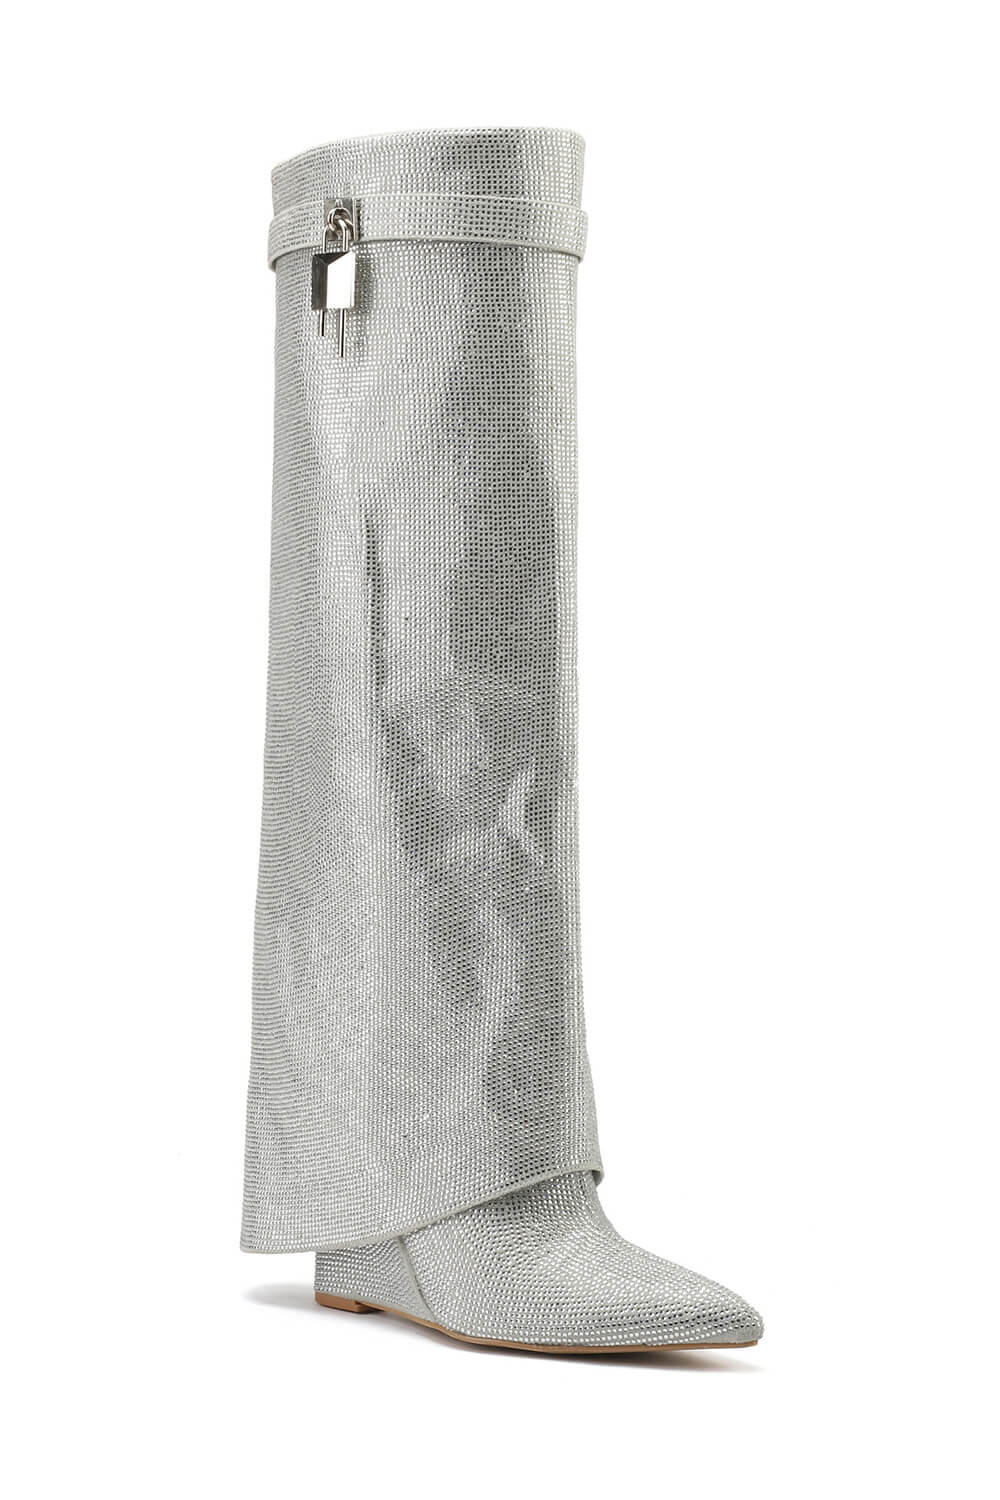 Gem Embellished Diamante Padlock Detail Folded Knee High Wedge Boots - Silver